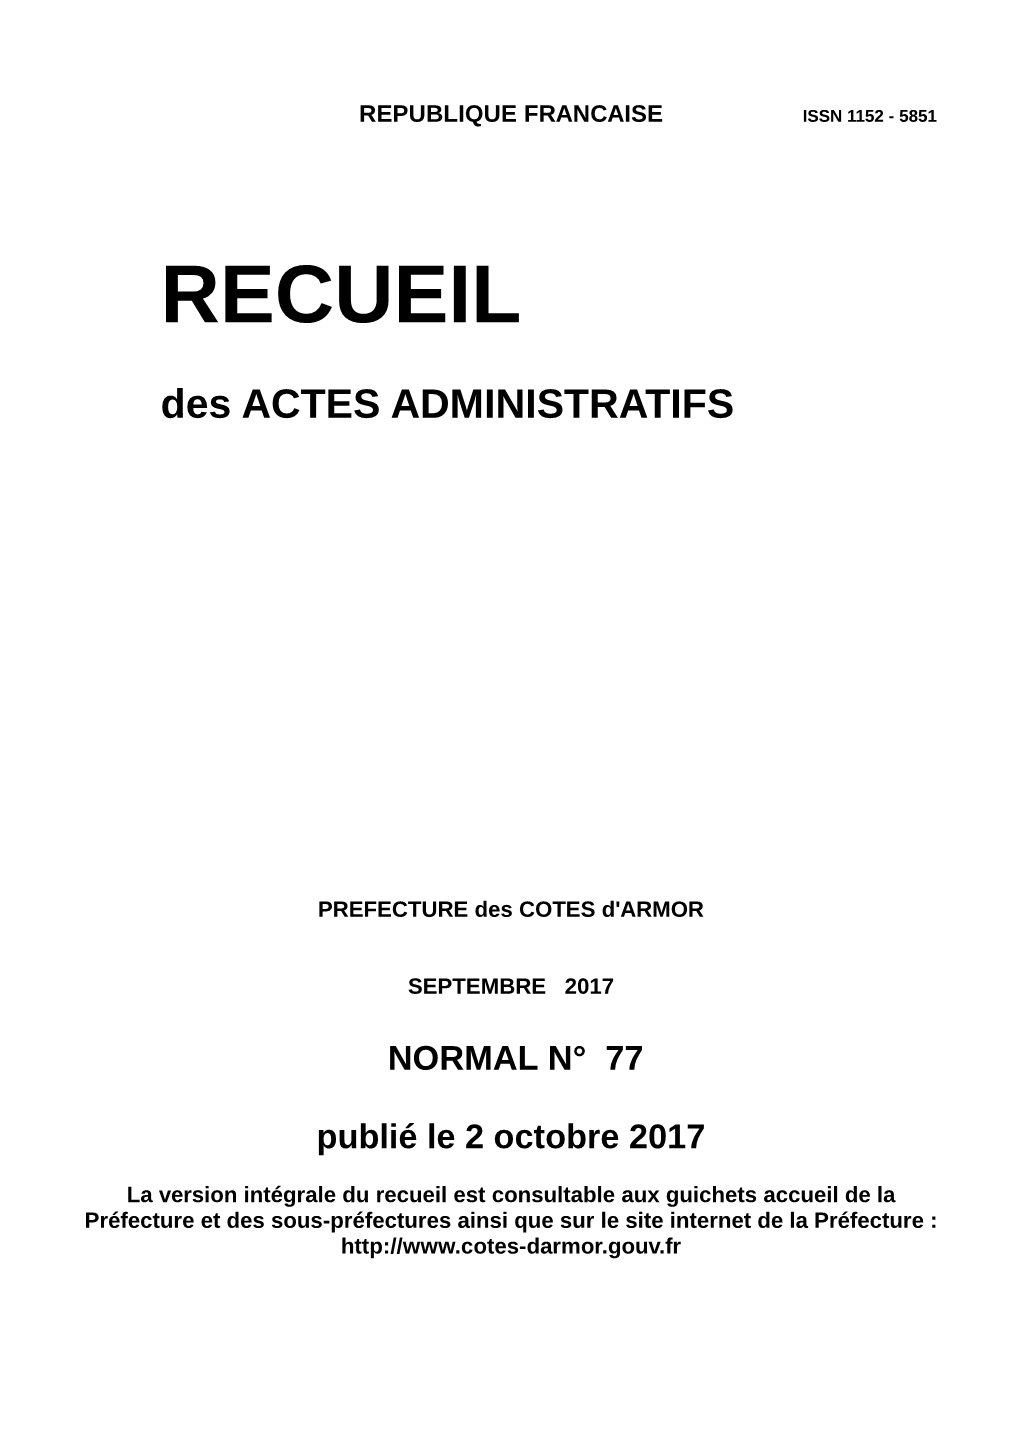 Recueil Normal N° 77 SEPTEMBRE 2017